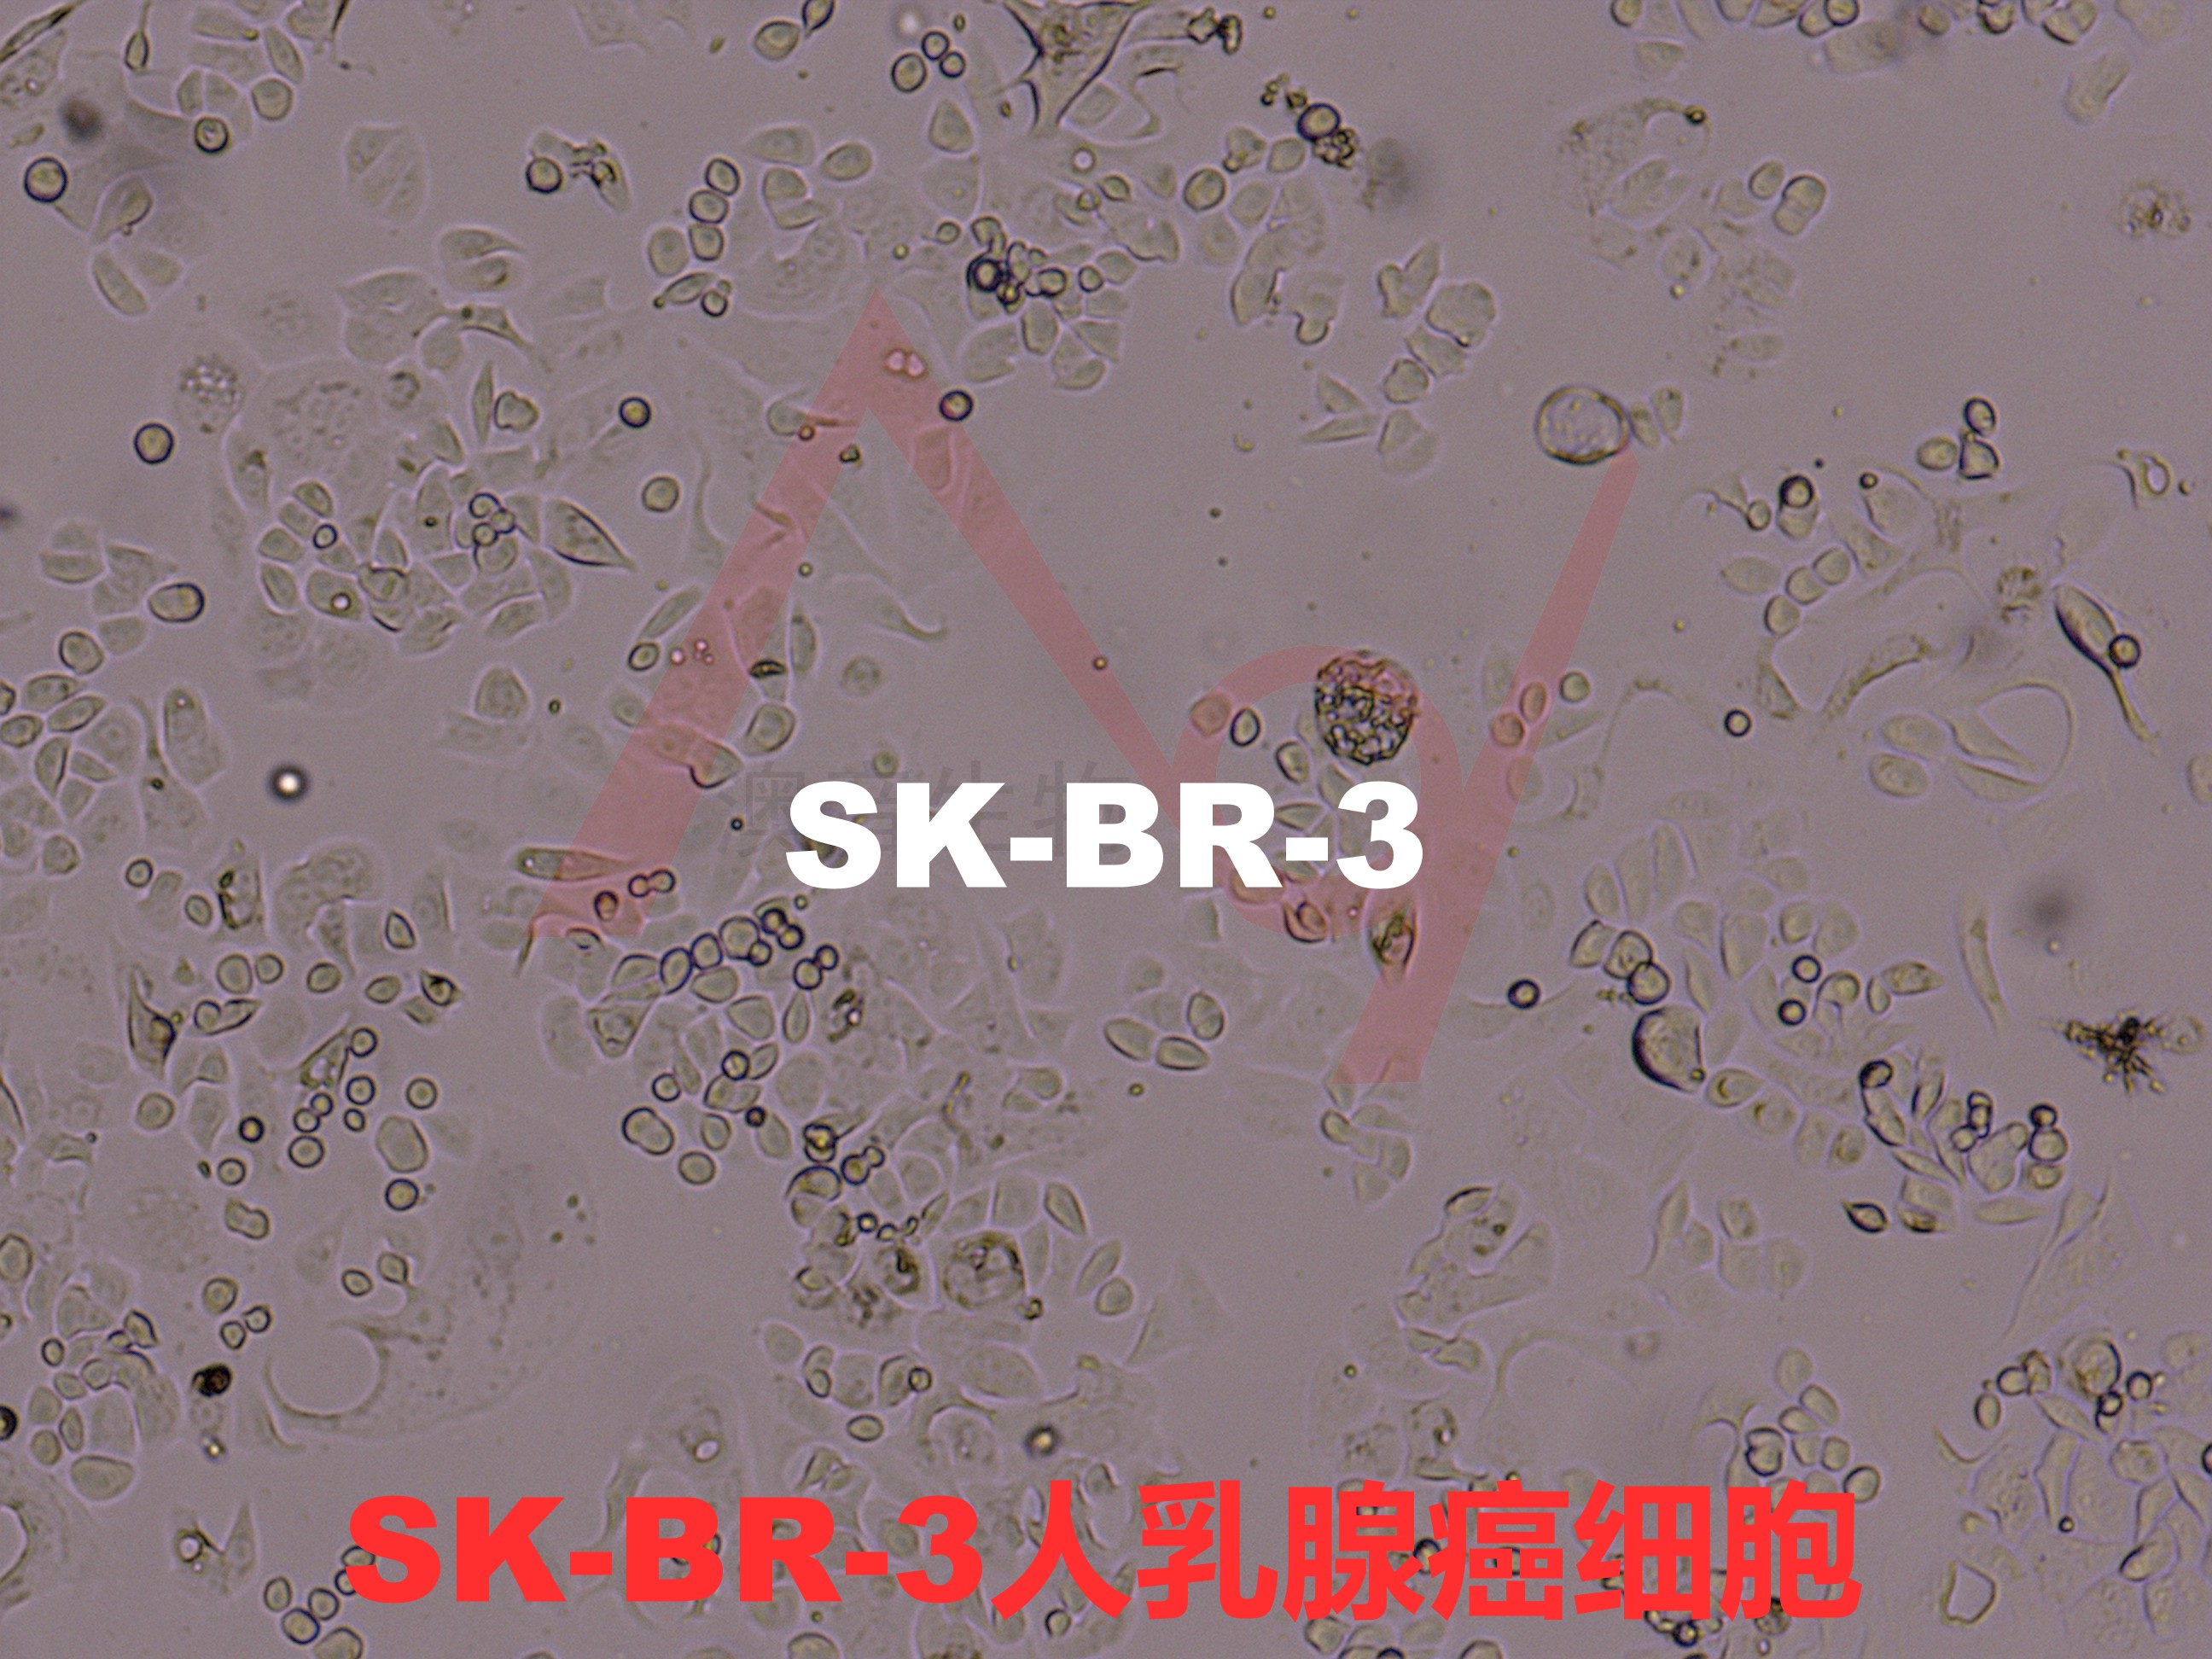 SK-BR-3[SK-Br-3; Sk-Br-3; SK BR 03; SKBR-3; SKBr-3; SK-BR3; SKBr3; SkBr3; SKBR3]乳腺腺癌细胞